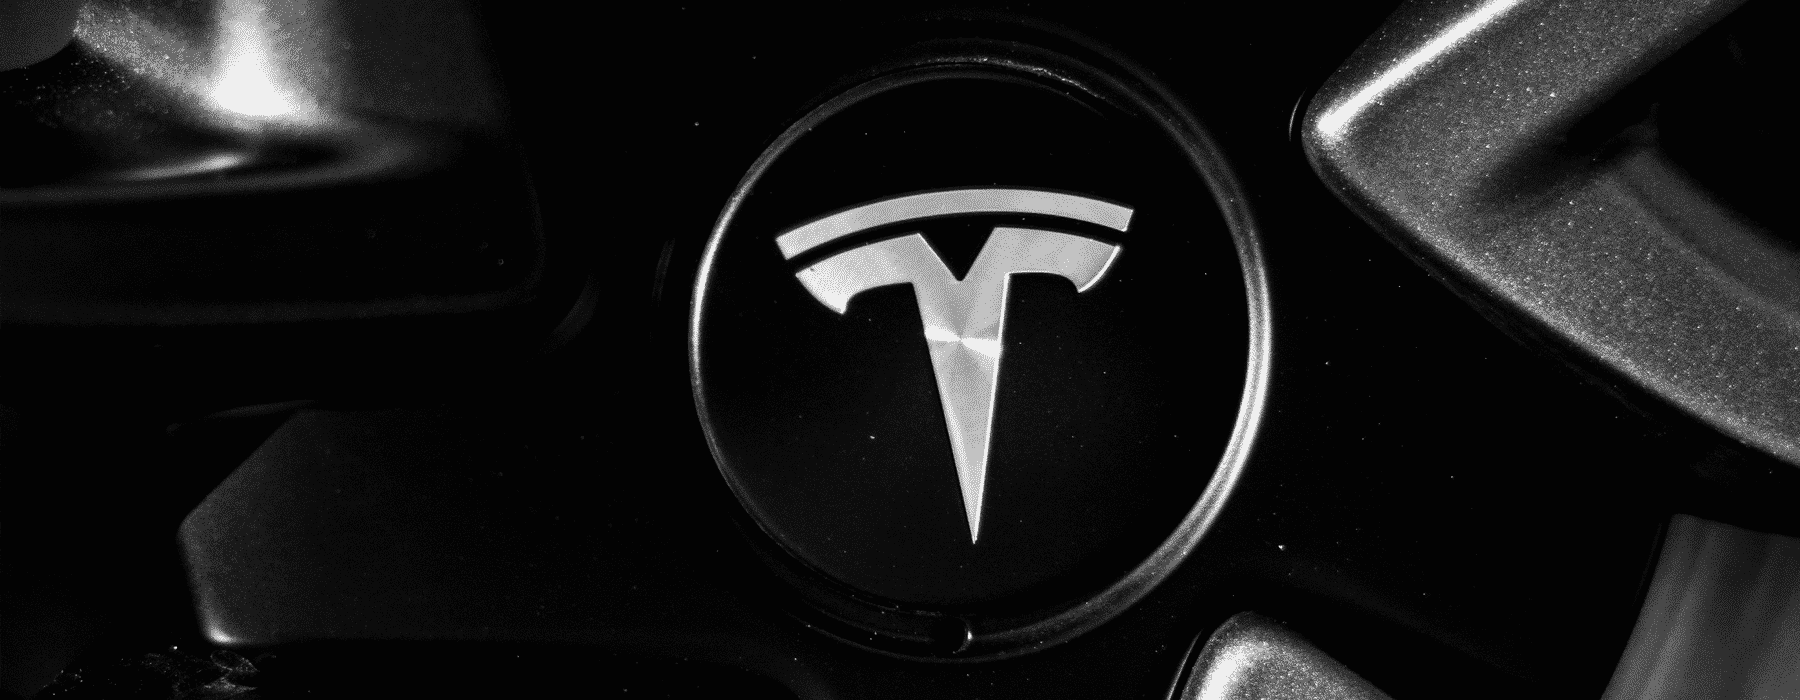 DMV Fails Student Driver for Using Tesla’s Regen Brakes